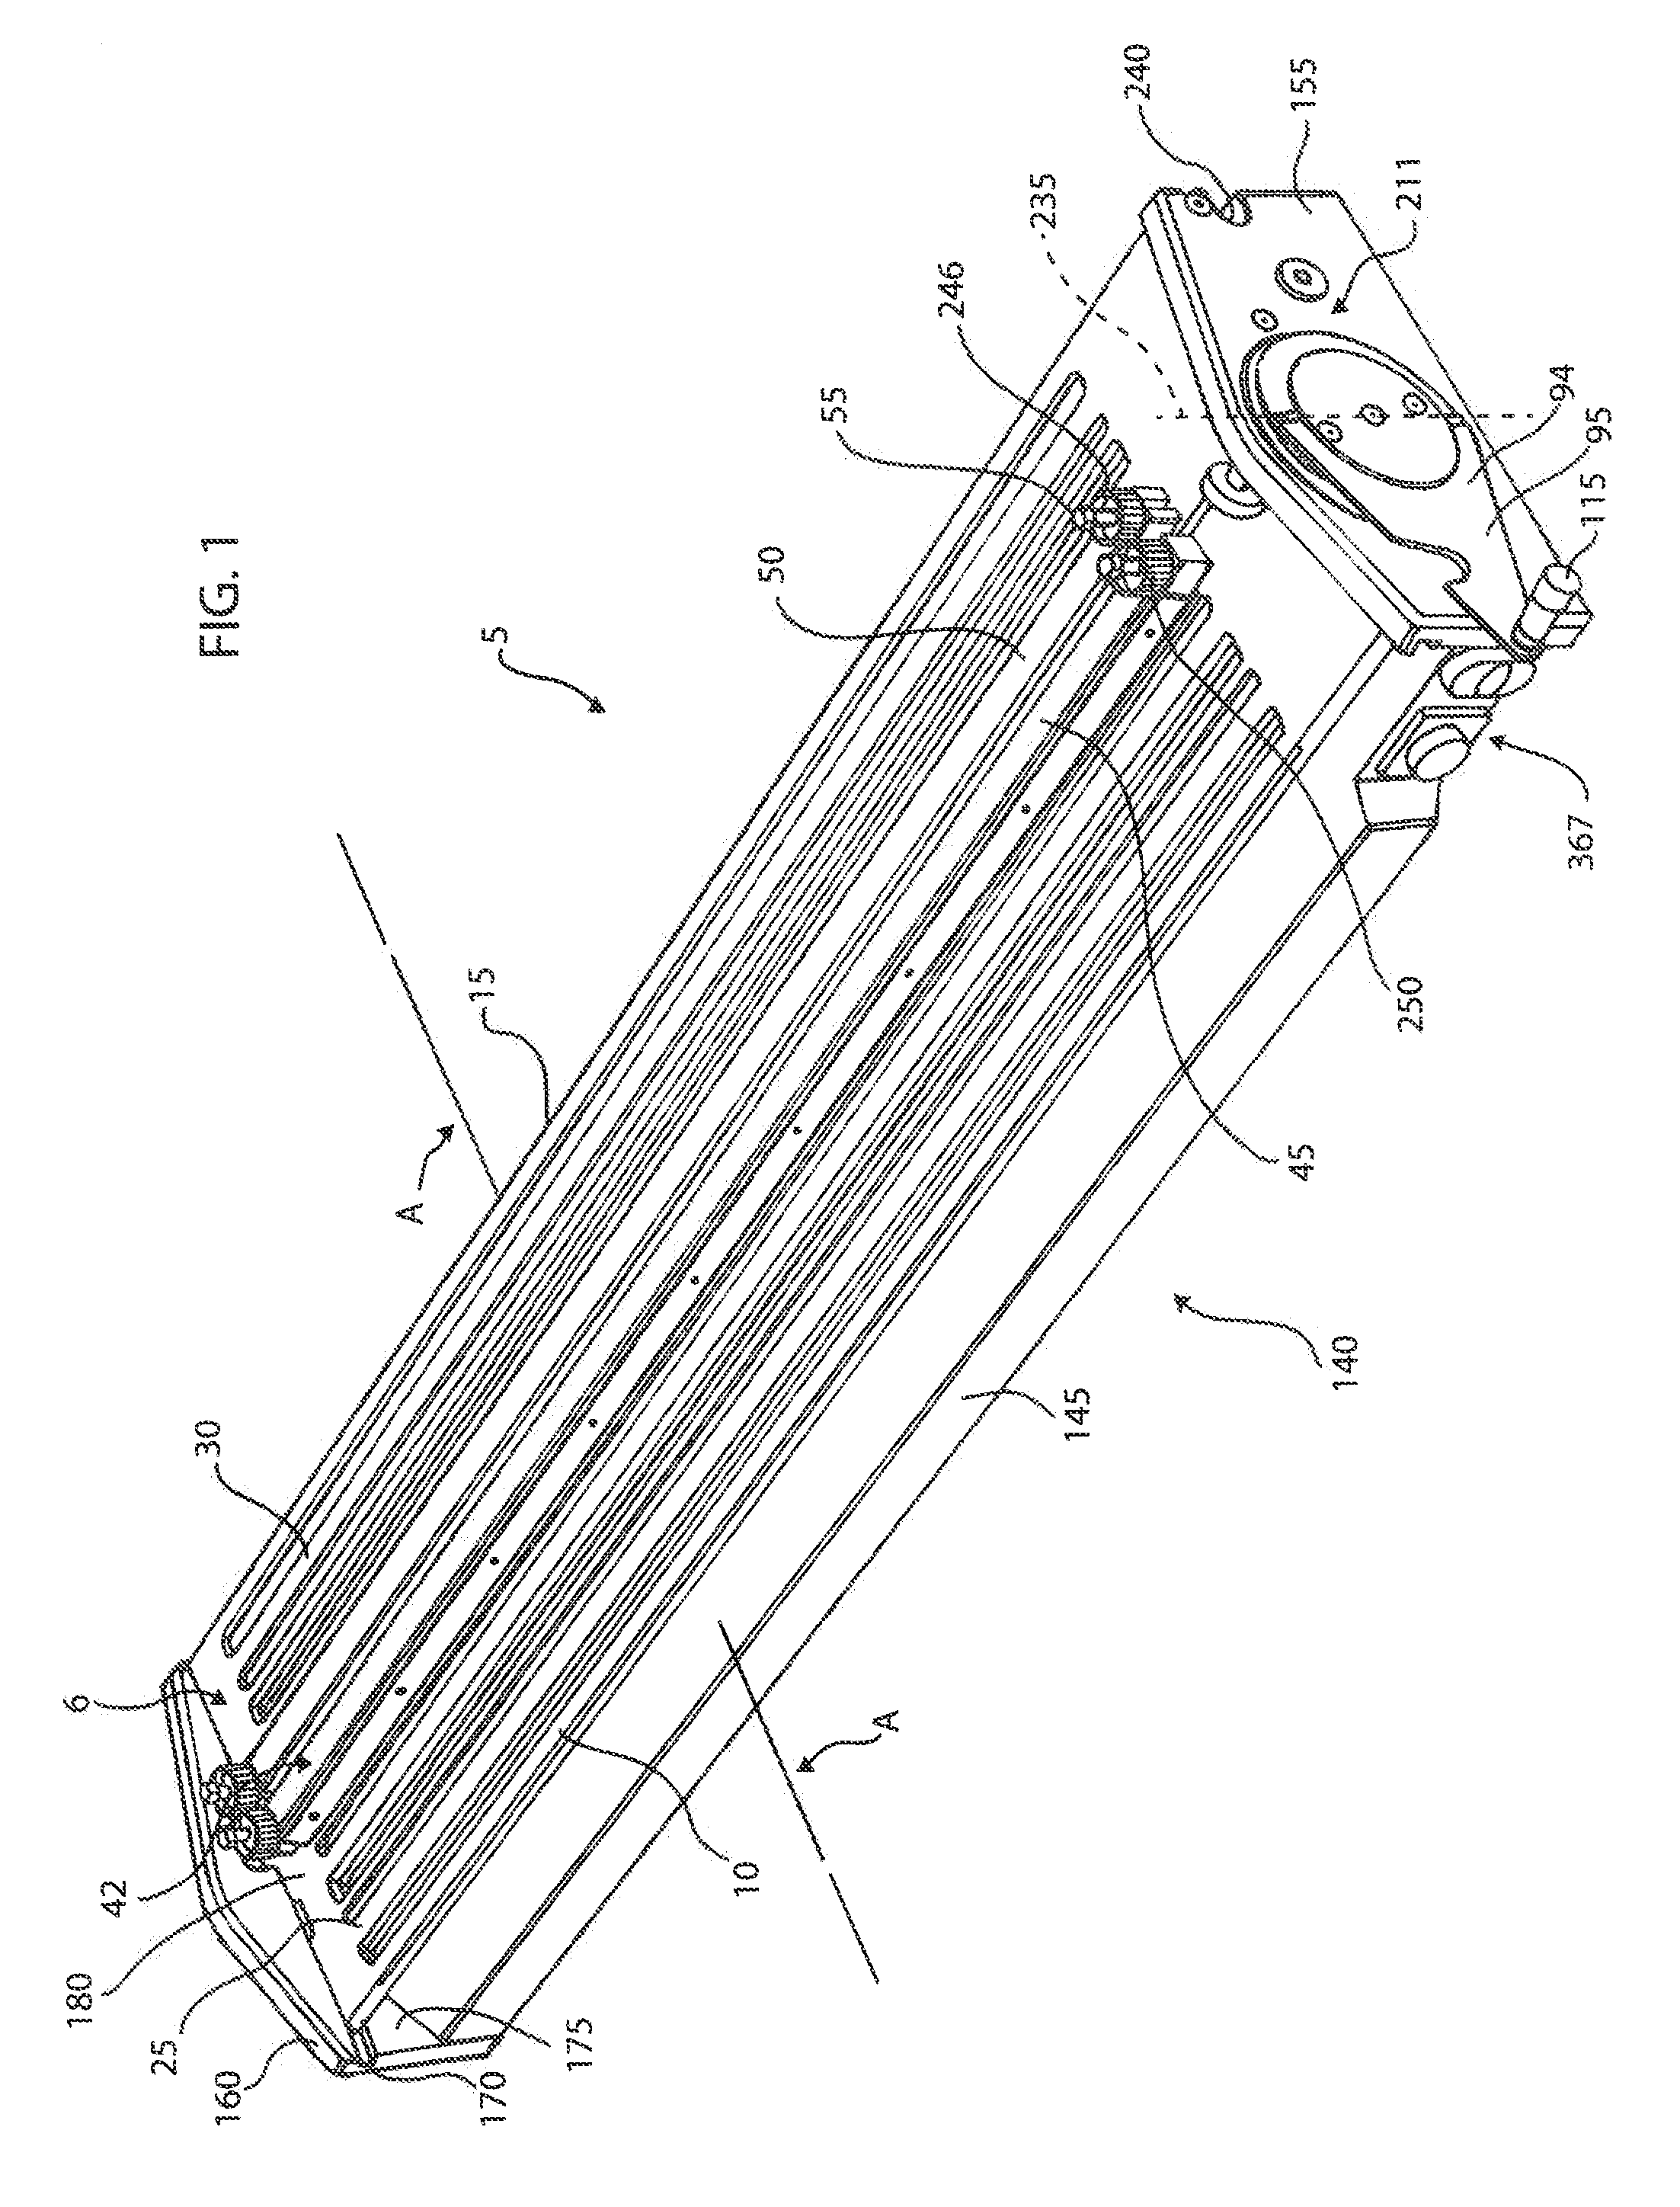 Welding apparatus for conveyor belts and method